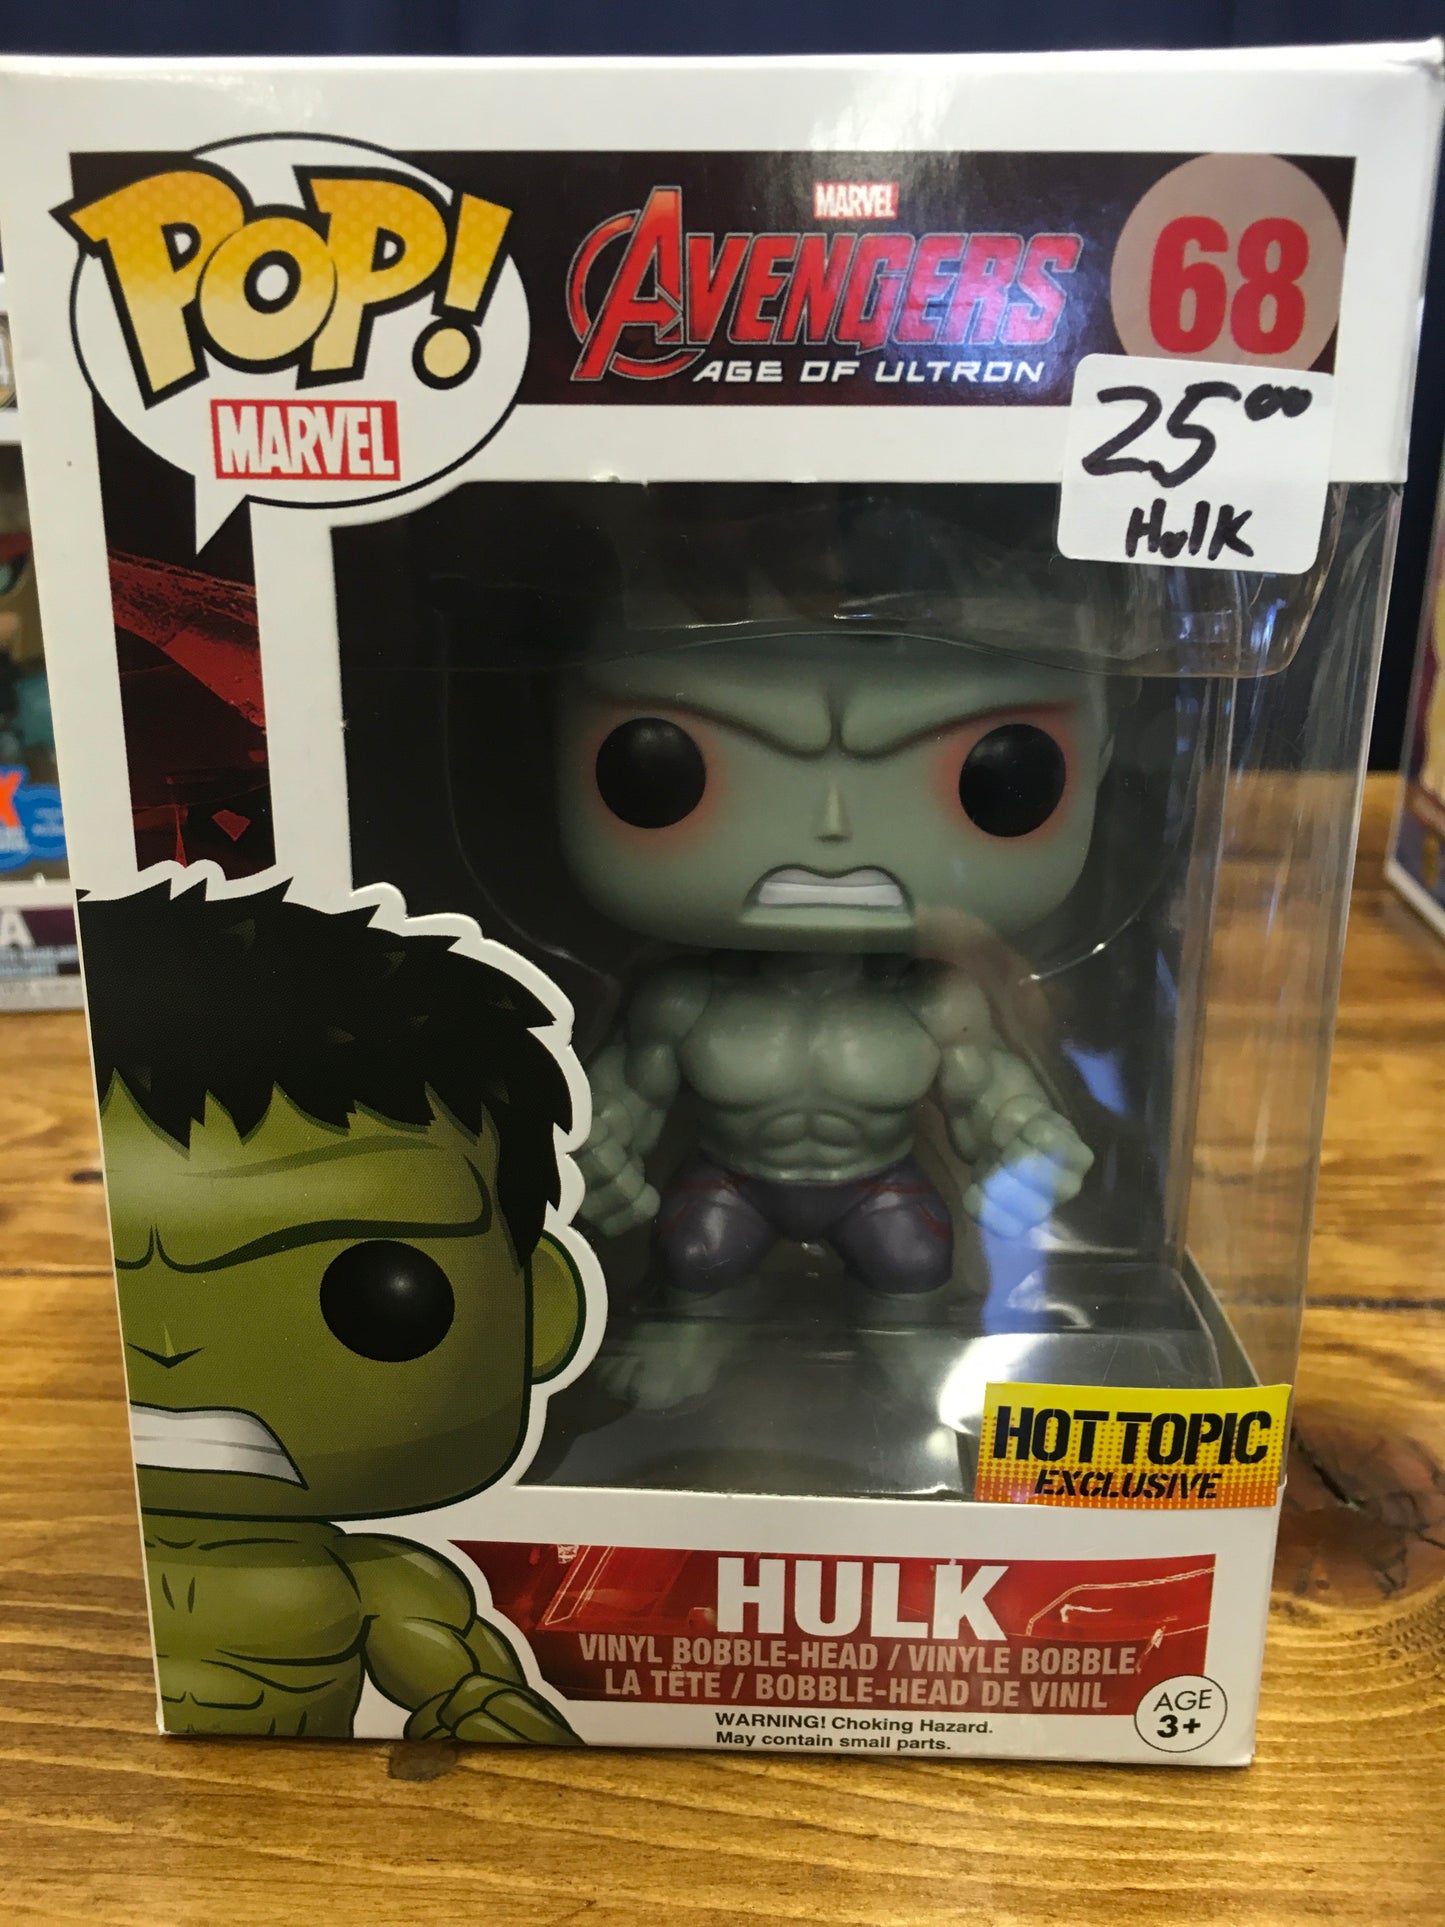 Avengers Age of Ultron Hulk Exclusive Funko Pop! Vinyl figure marvel